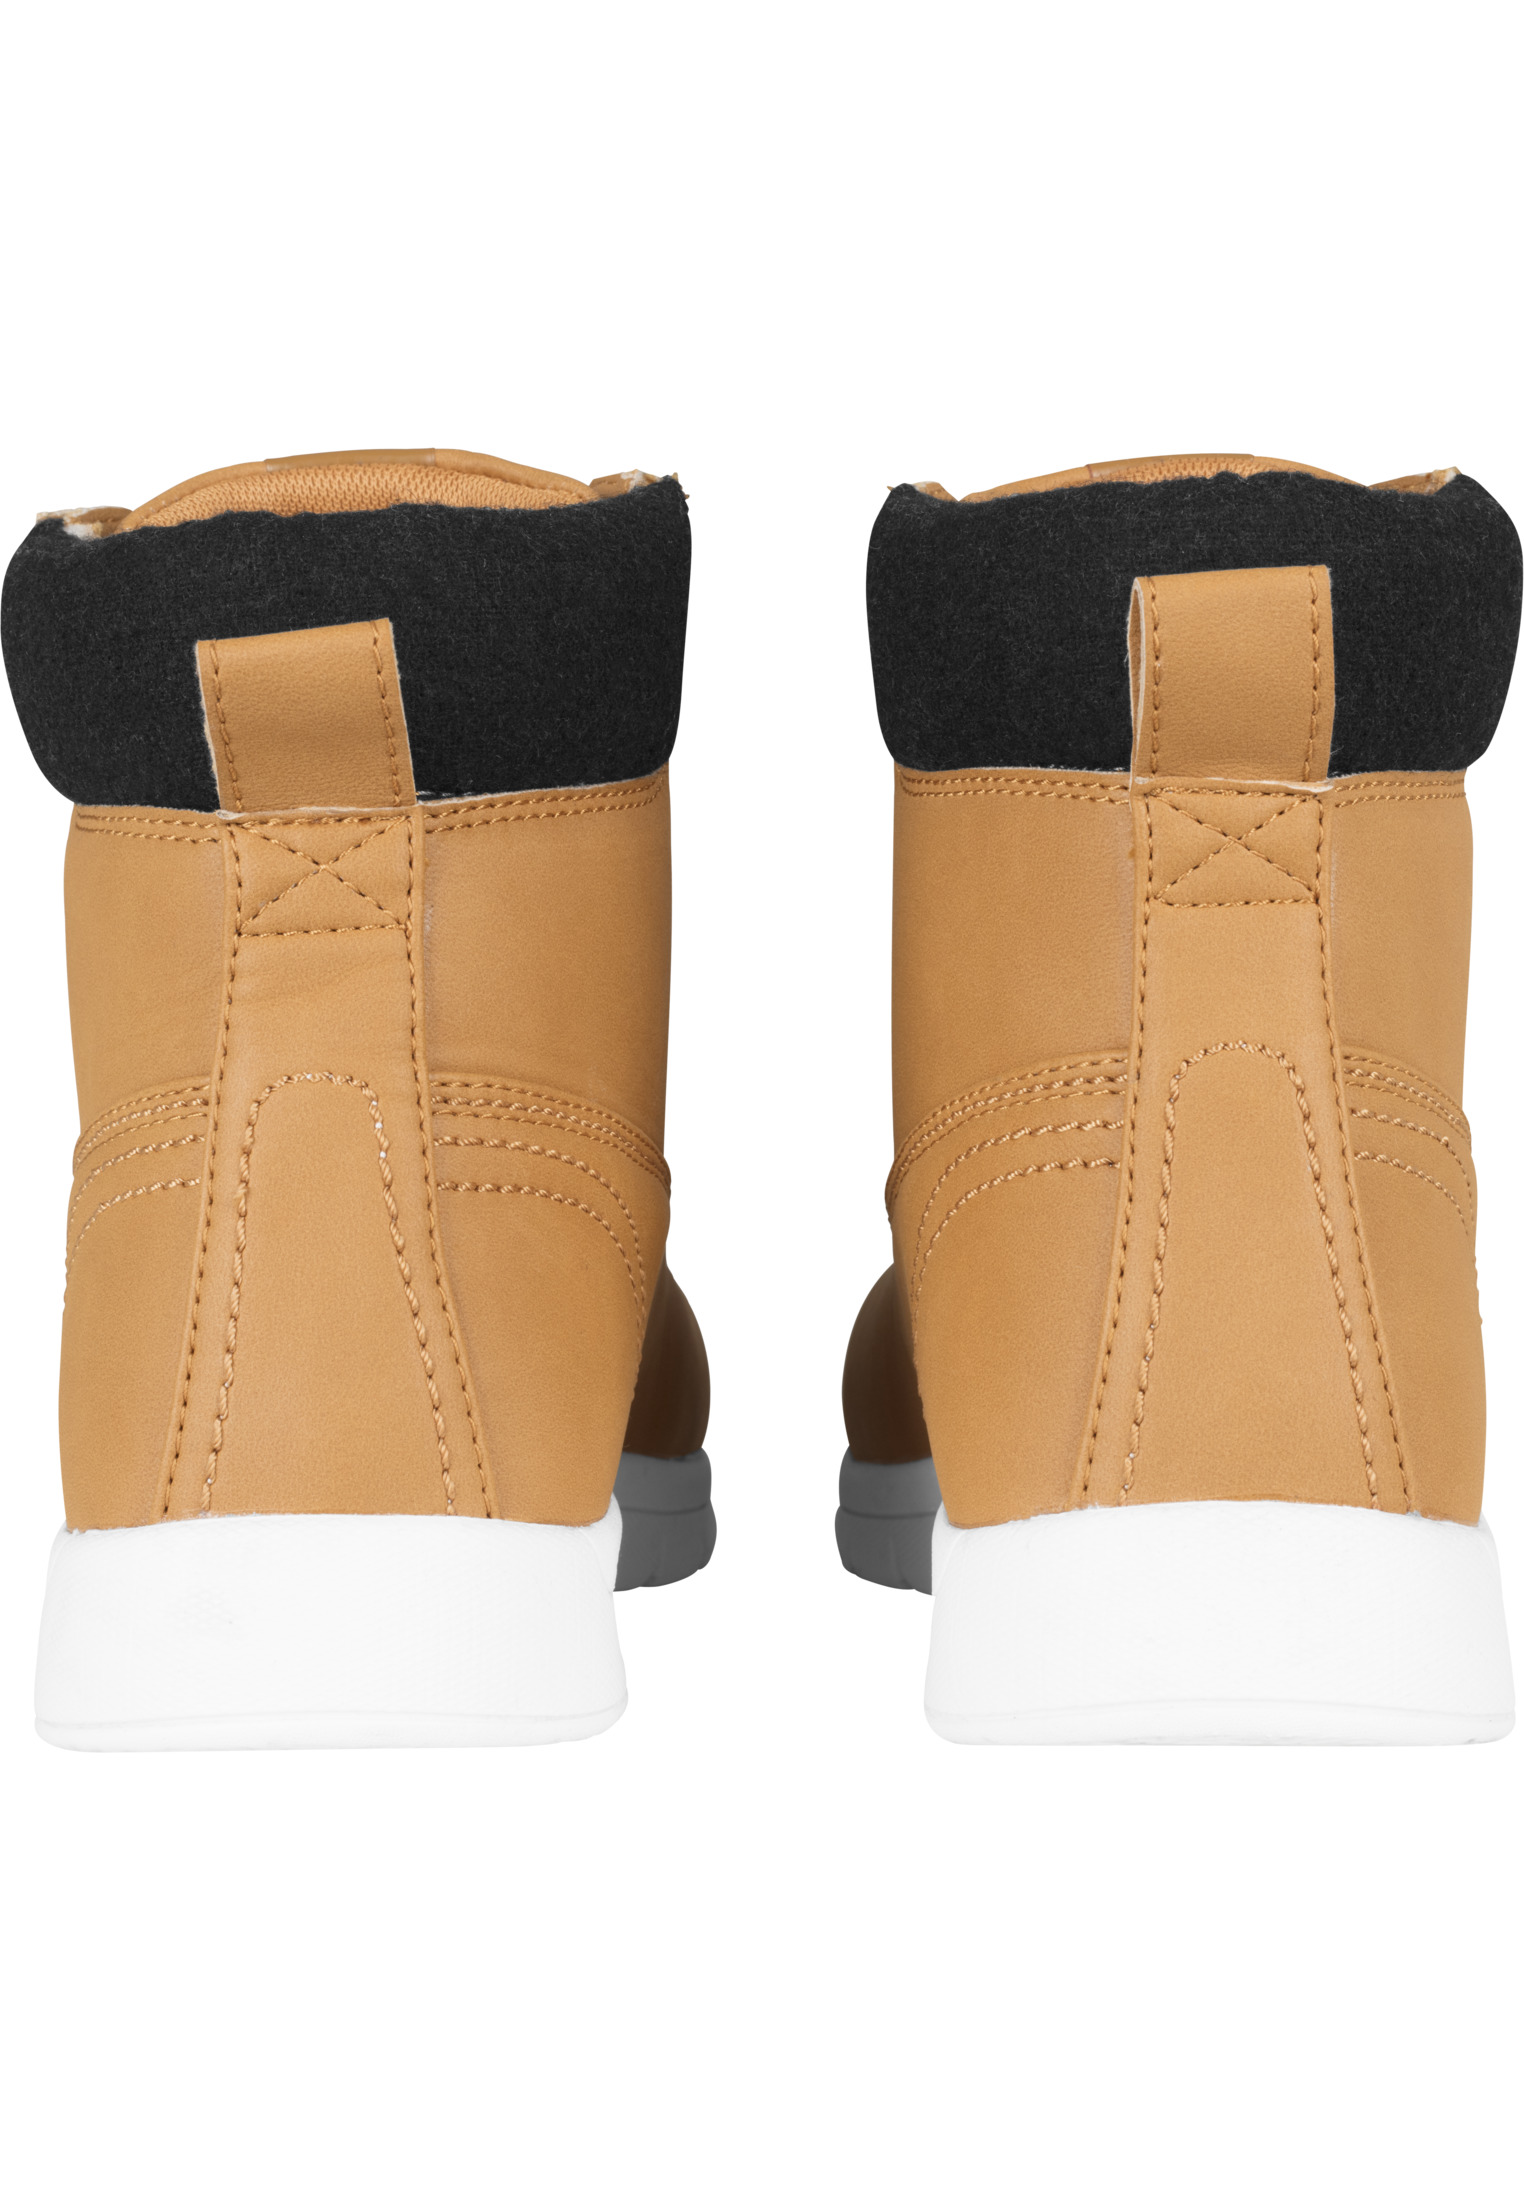 Schuhe Runner Boots in Farbe camel/black/white